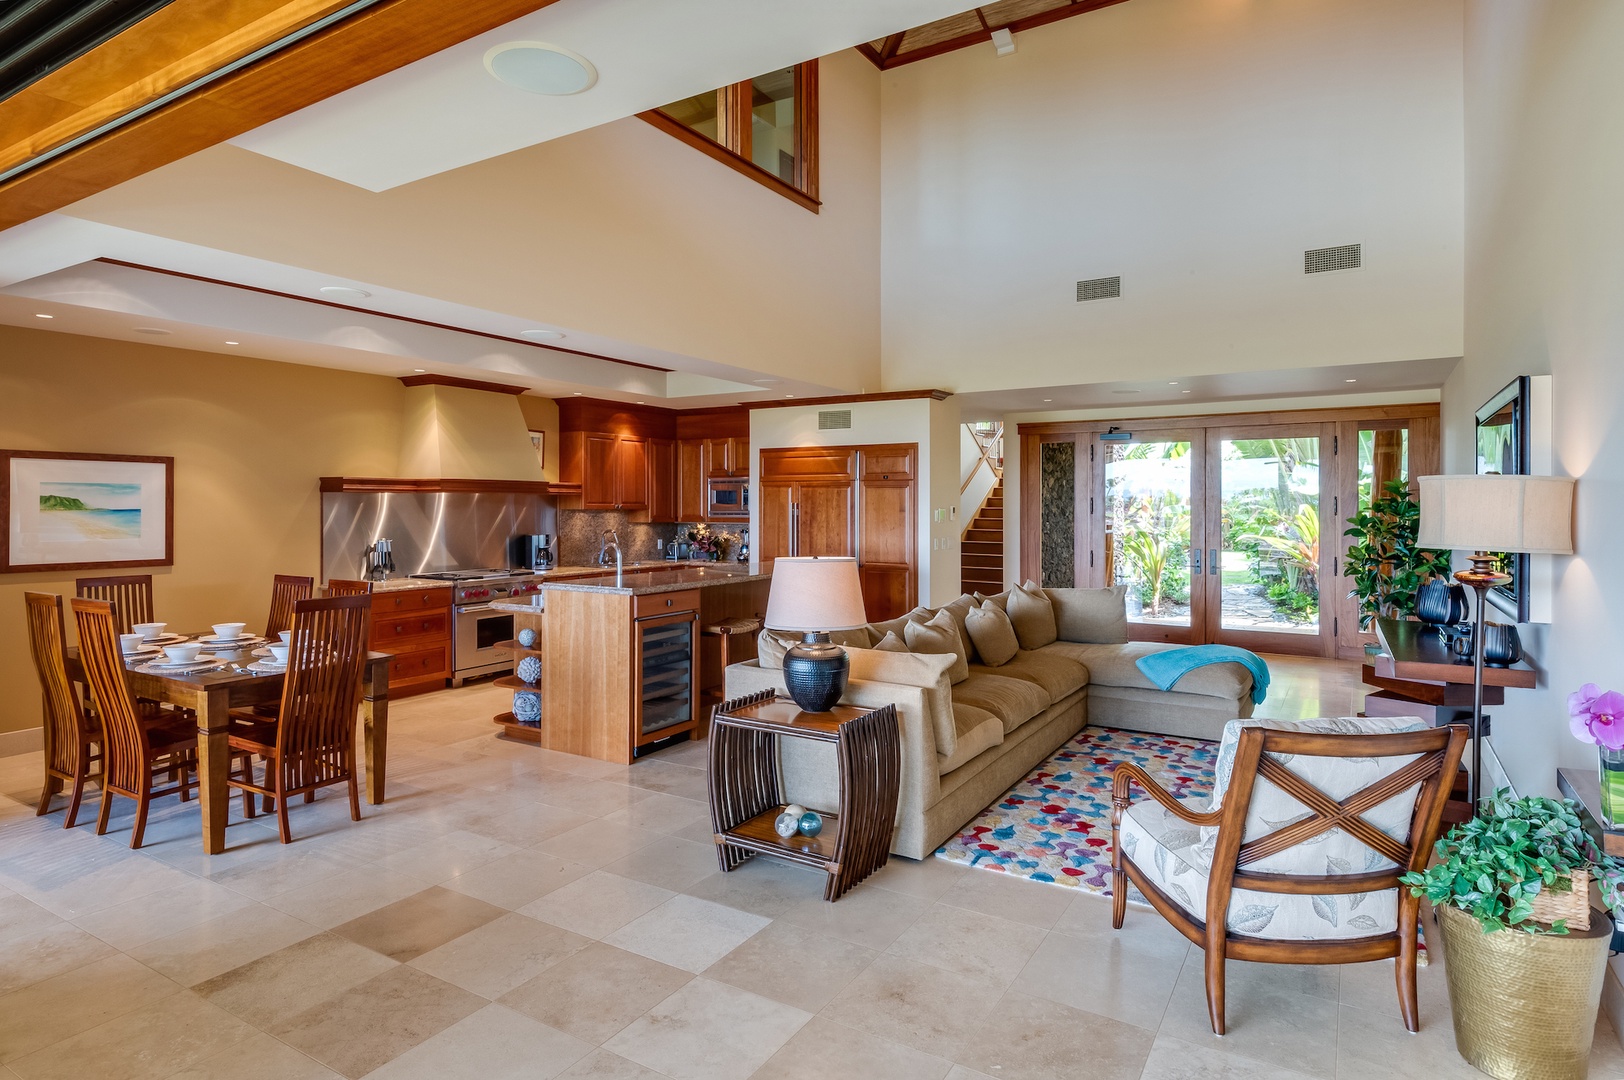 Kamuela Vacation Rentals, 3BD Ke Kailani (1C) at Mauna Lani Resort - Alternate Angle of Living Room, Dining Area and Gourmet Kitchen